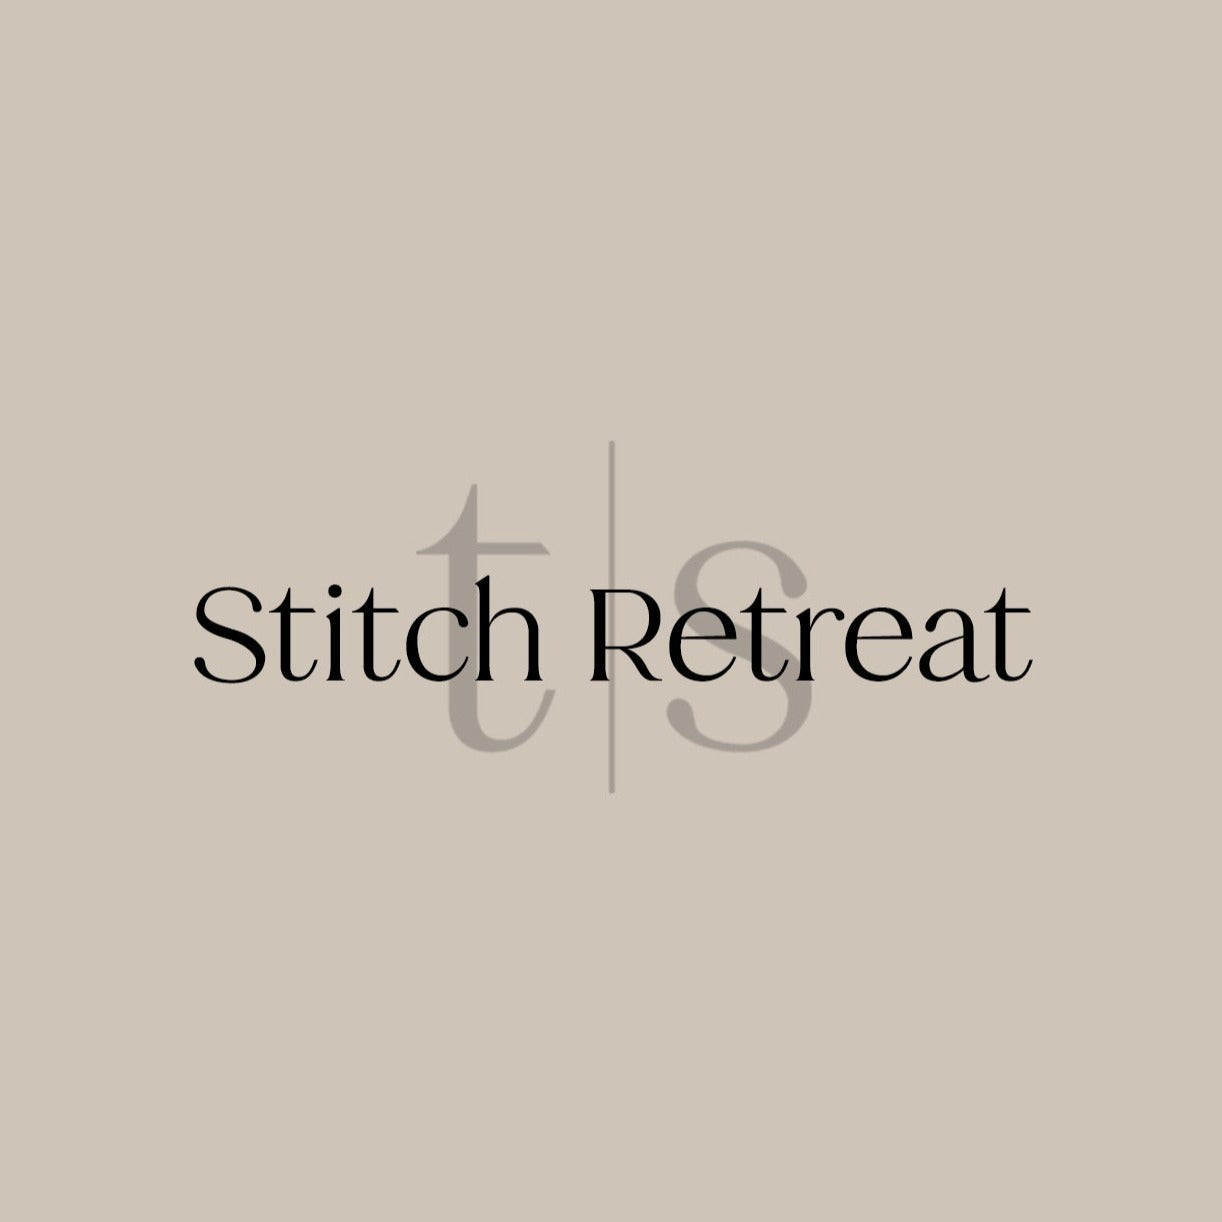 Stitch Retreat | Feb 23 - 24